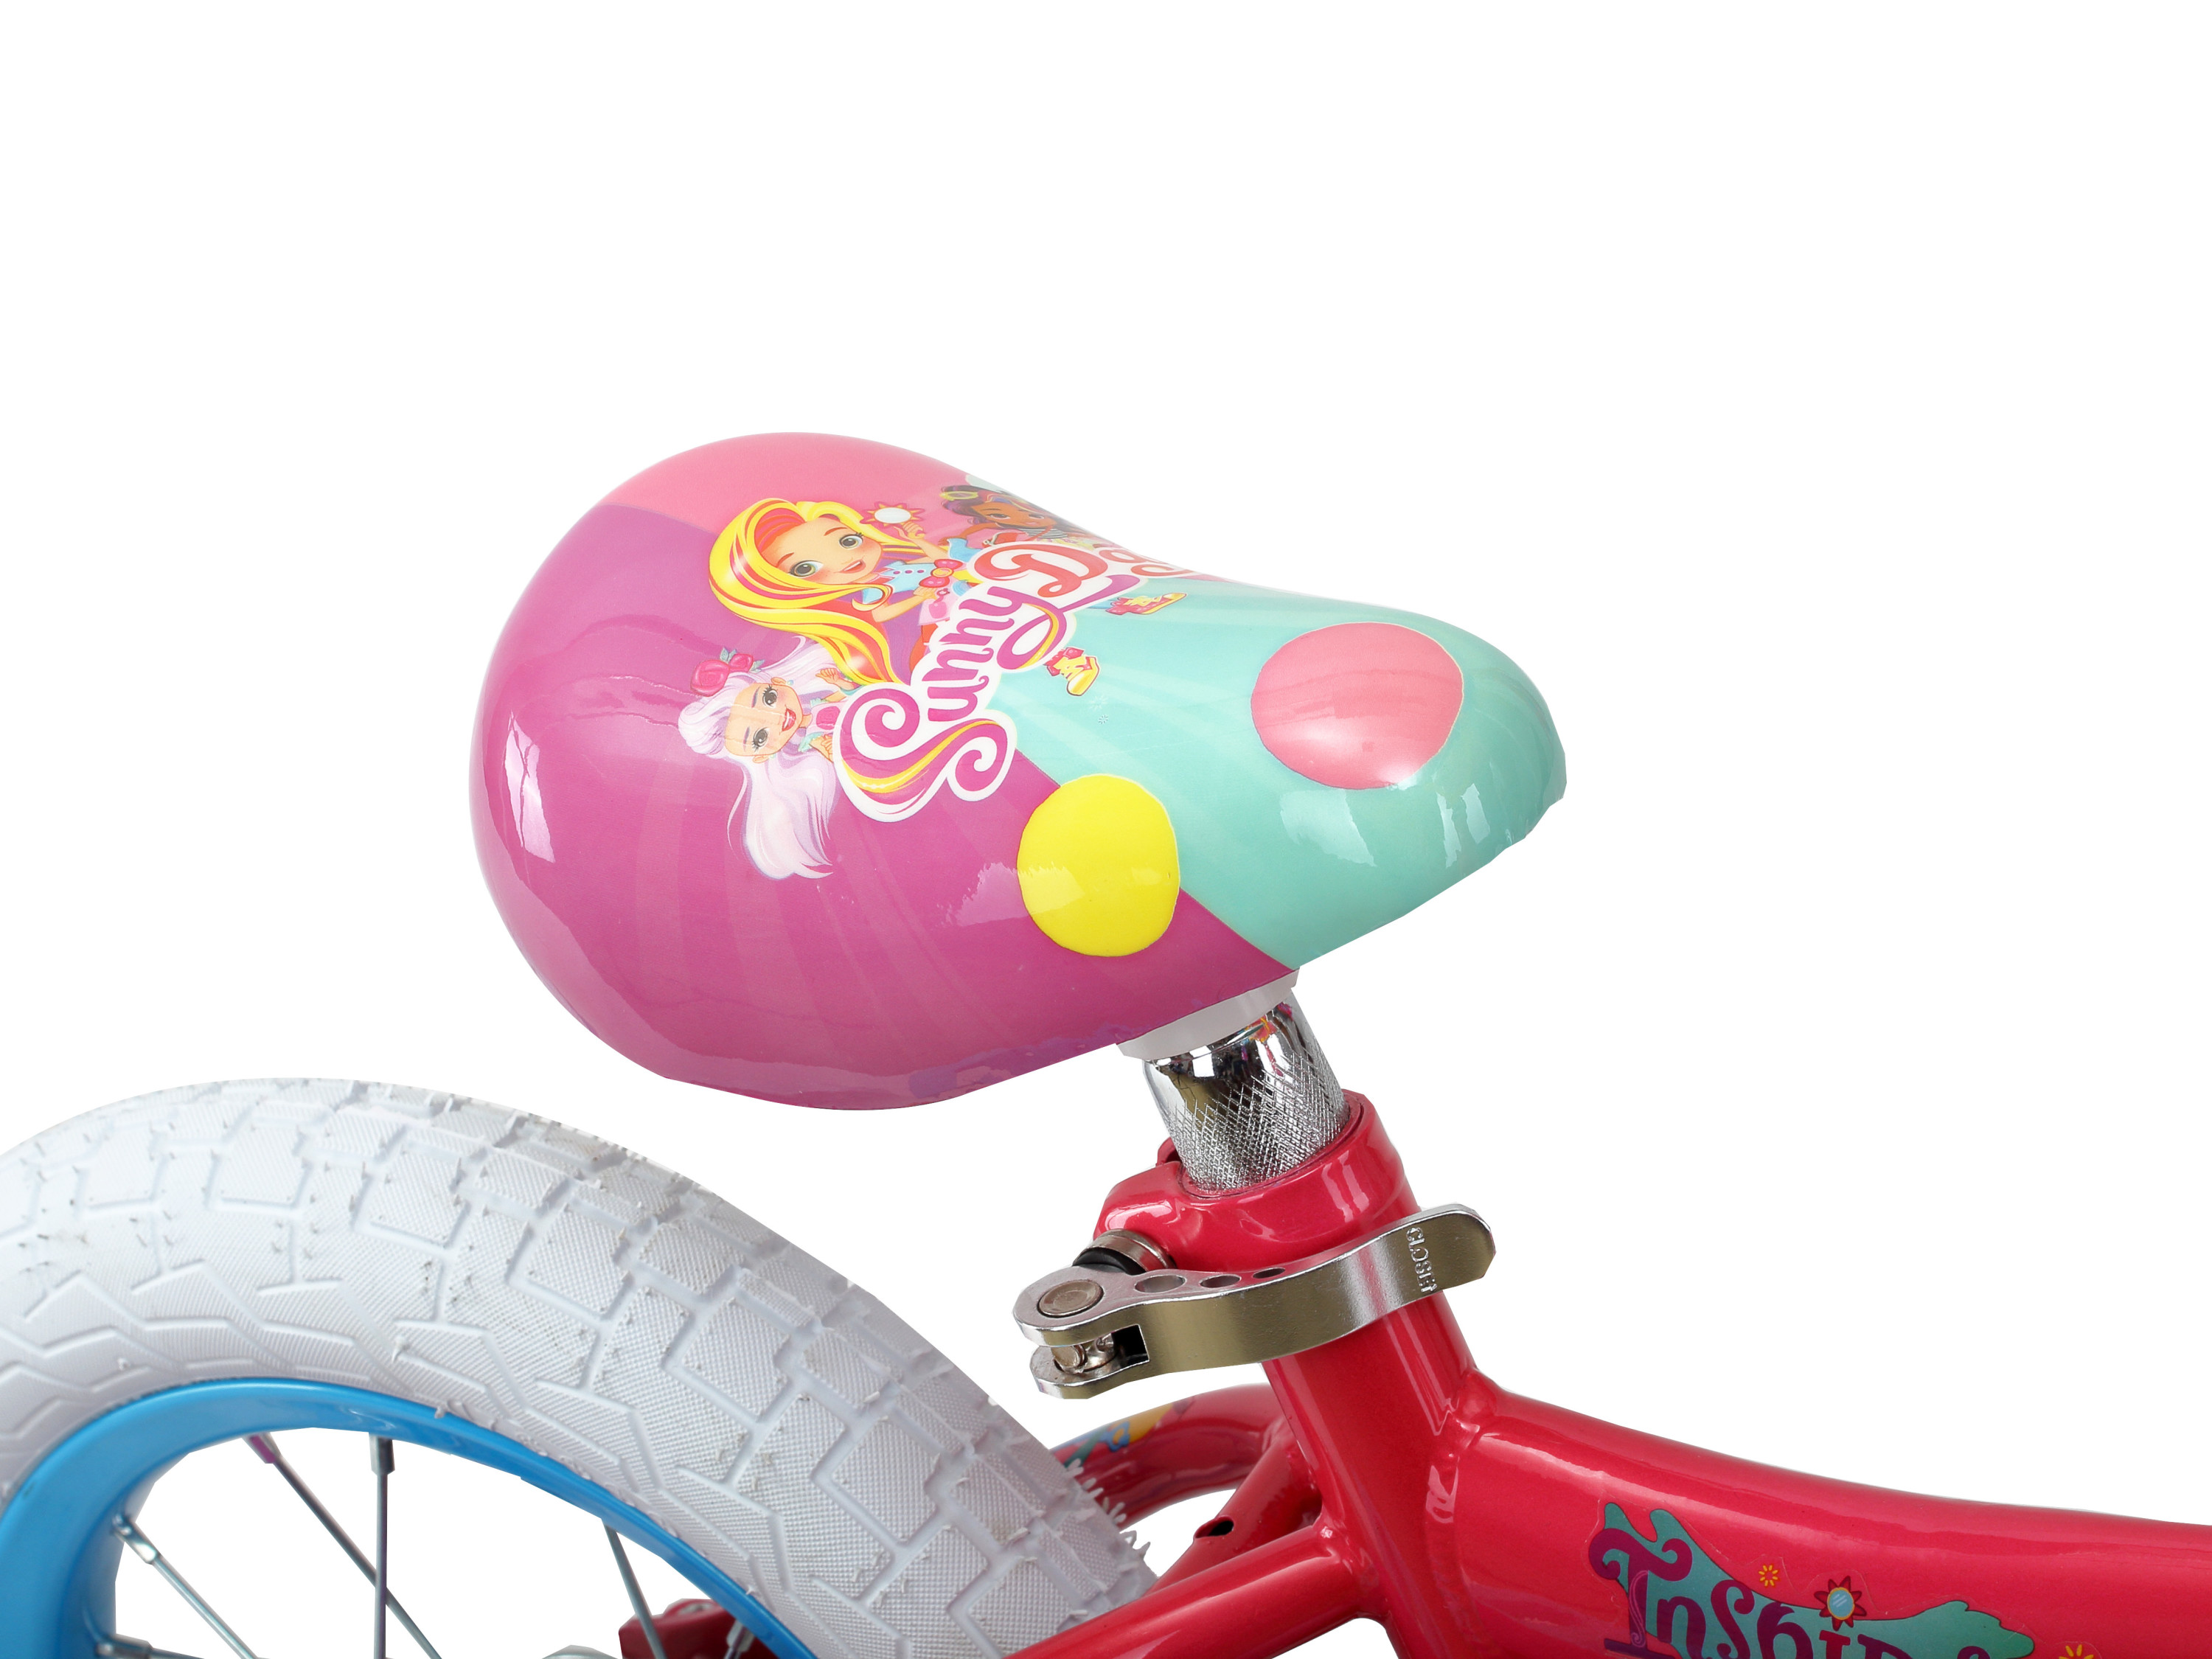 Nickelodeon Sunny Day kids bike, 12-inch wheels, training wheels, Girls, Boys, Pink - image 2 of 5